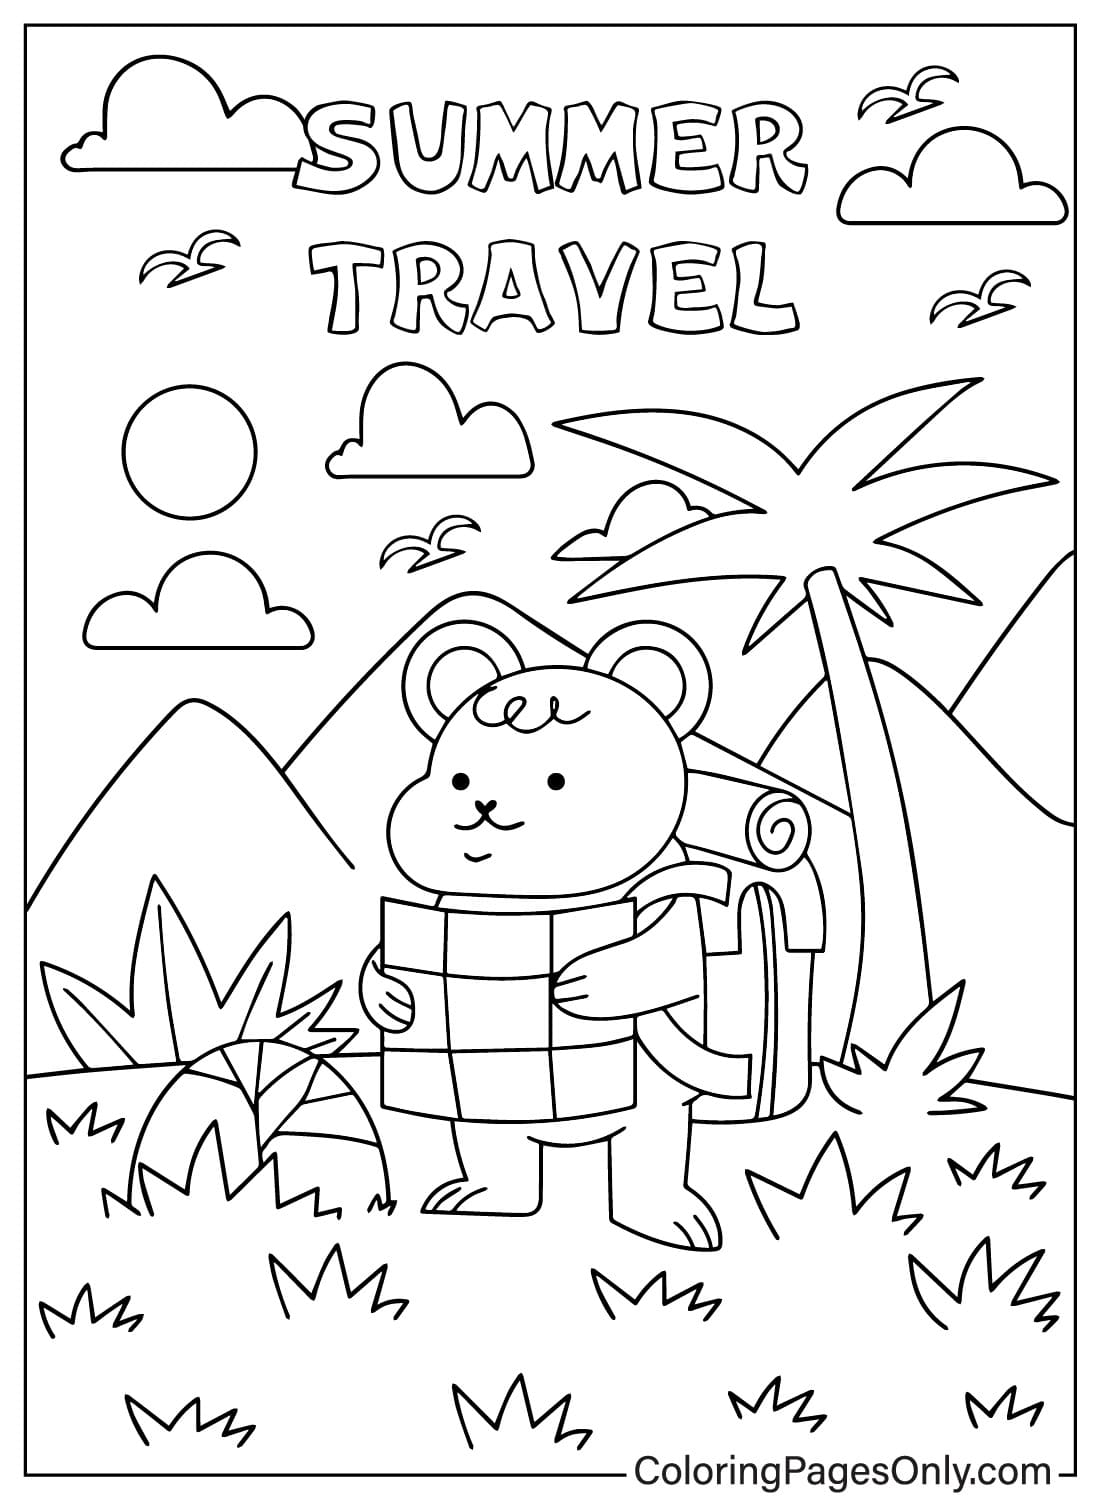 Bear Travels